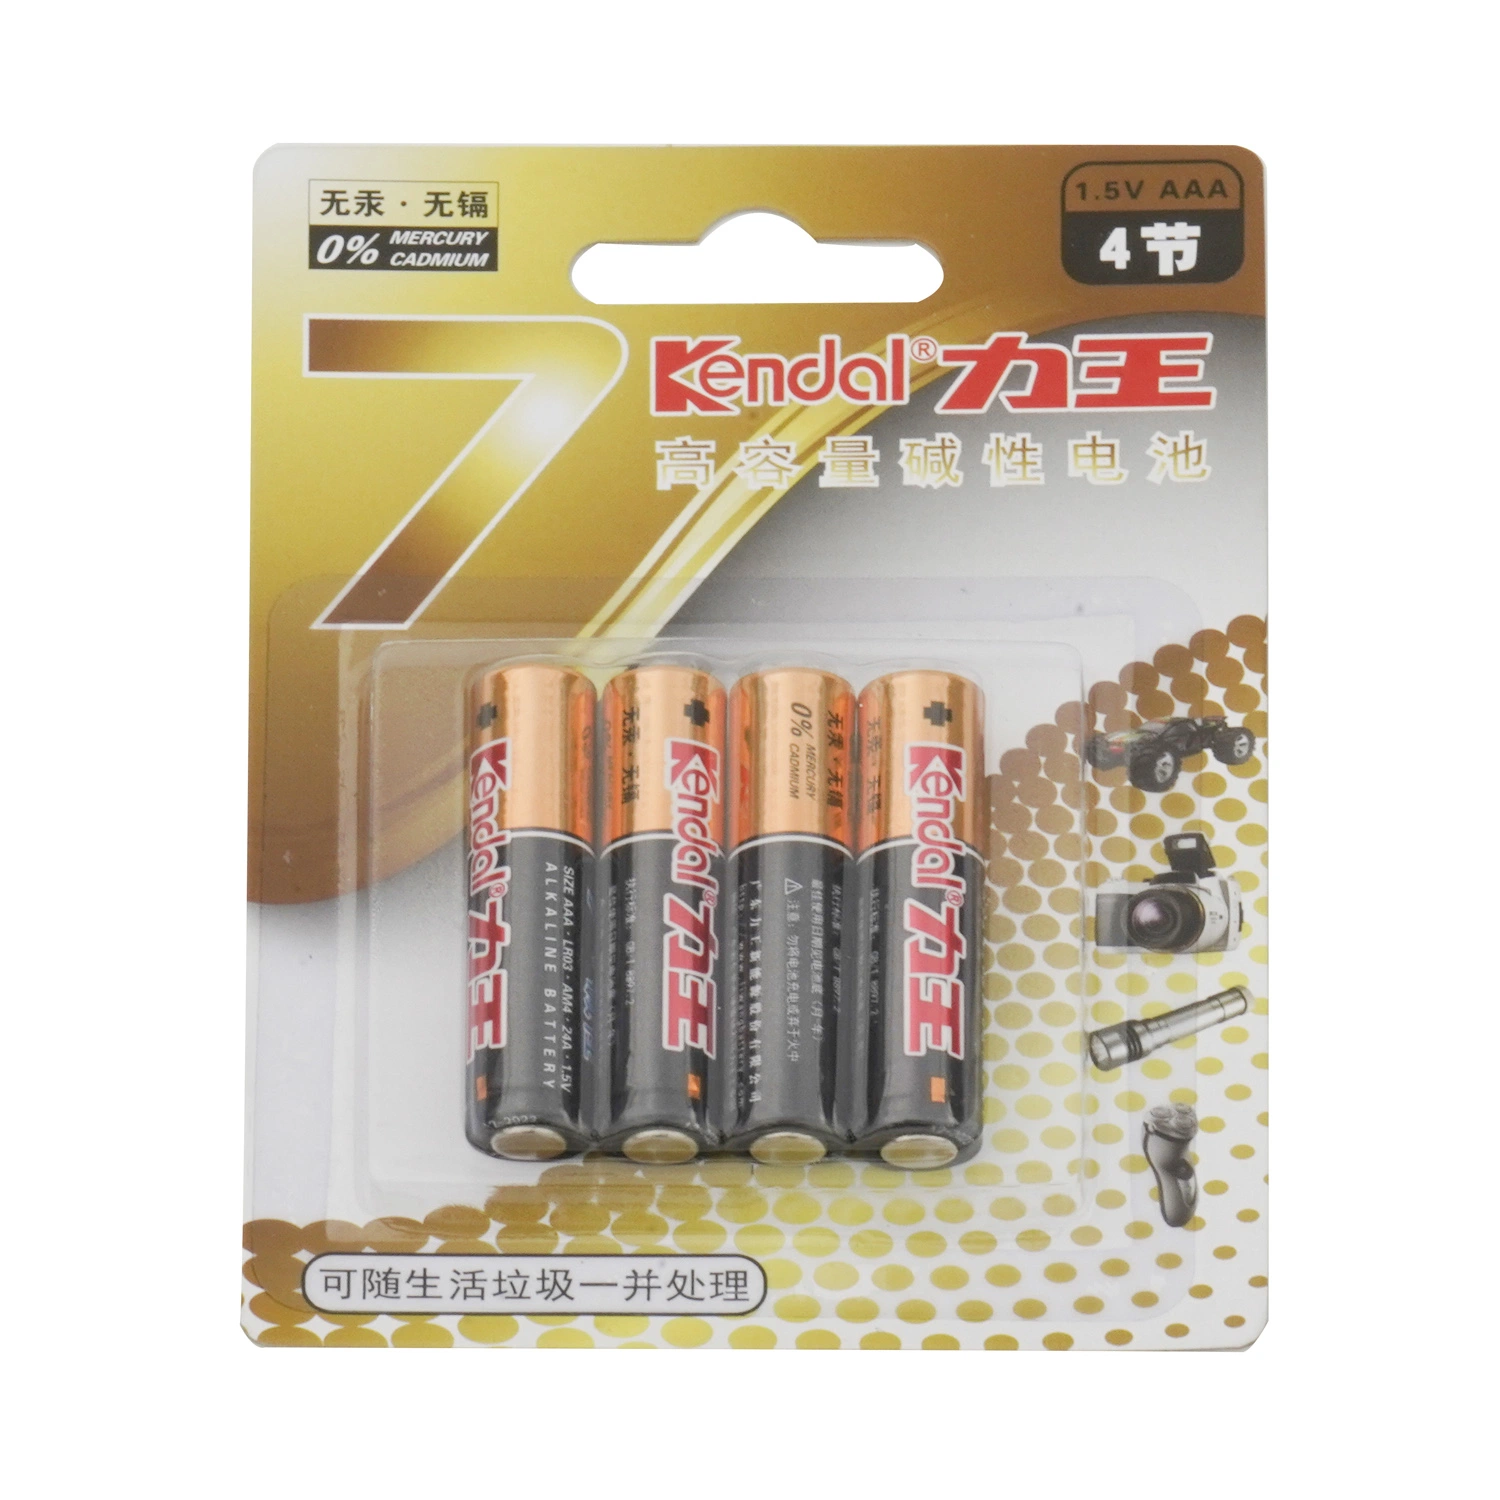 Super Alkaline Battery C Size Lr14/Am-2 Dry Batteries